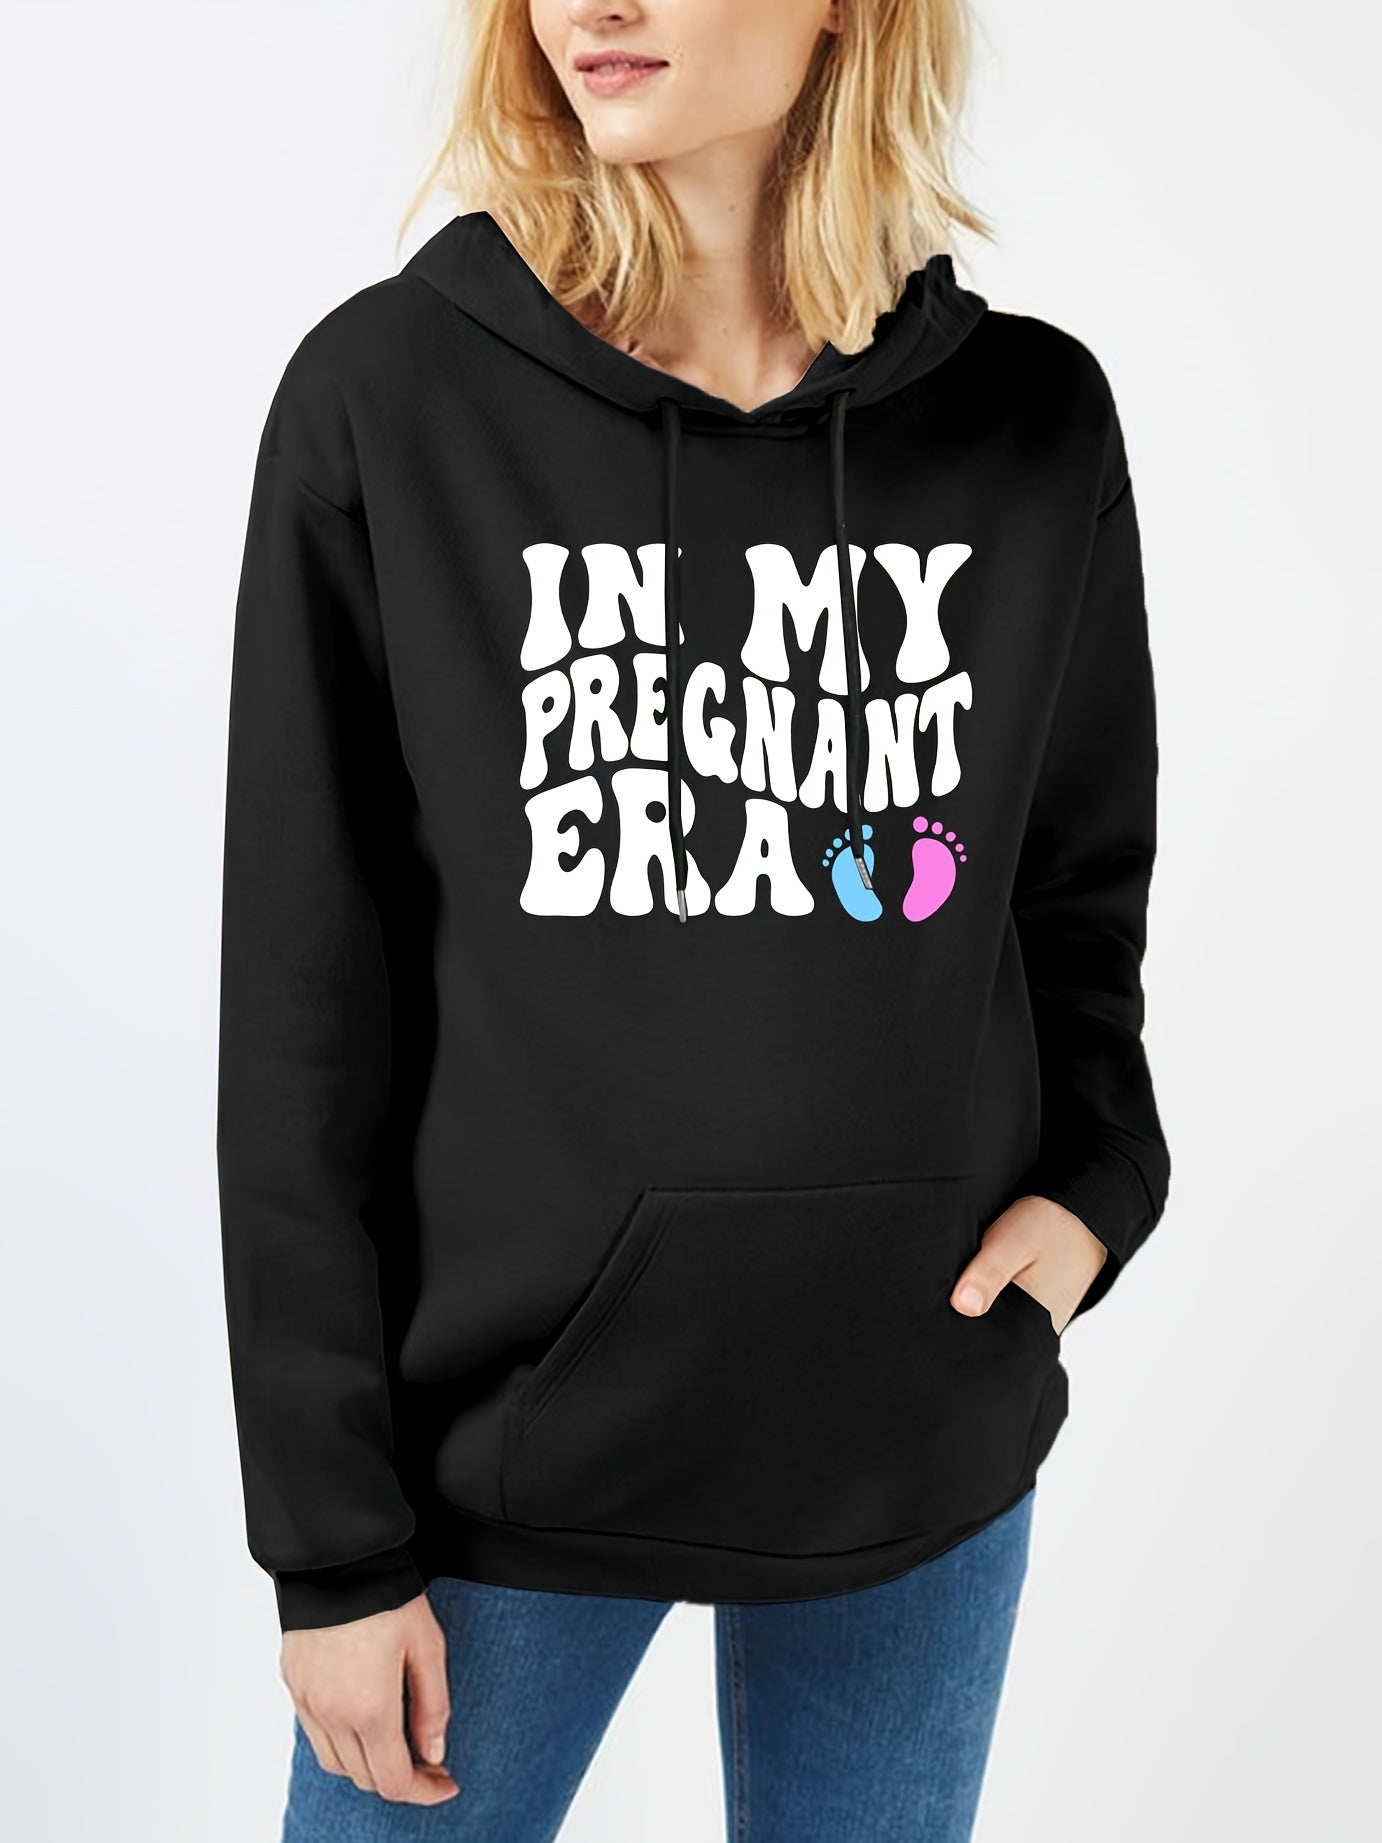 IN MY PREGNANT ERA Women's Christian Maternity Pullover Hooded Sweatshirt claimedbygoddesigns